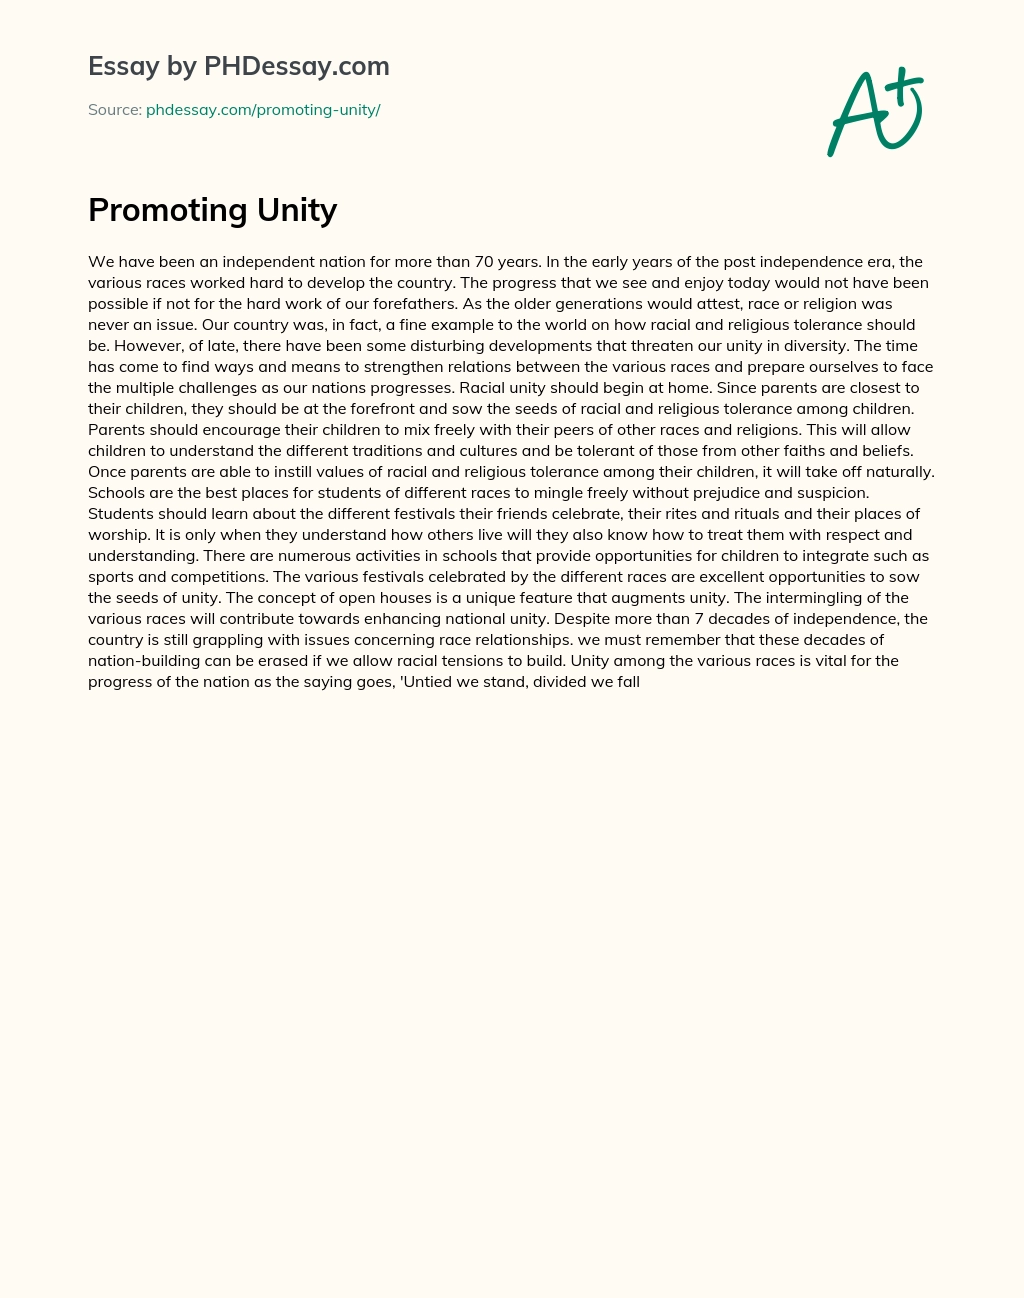 Promoting Unity essay